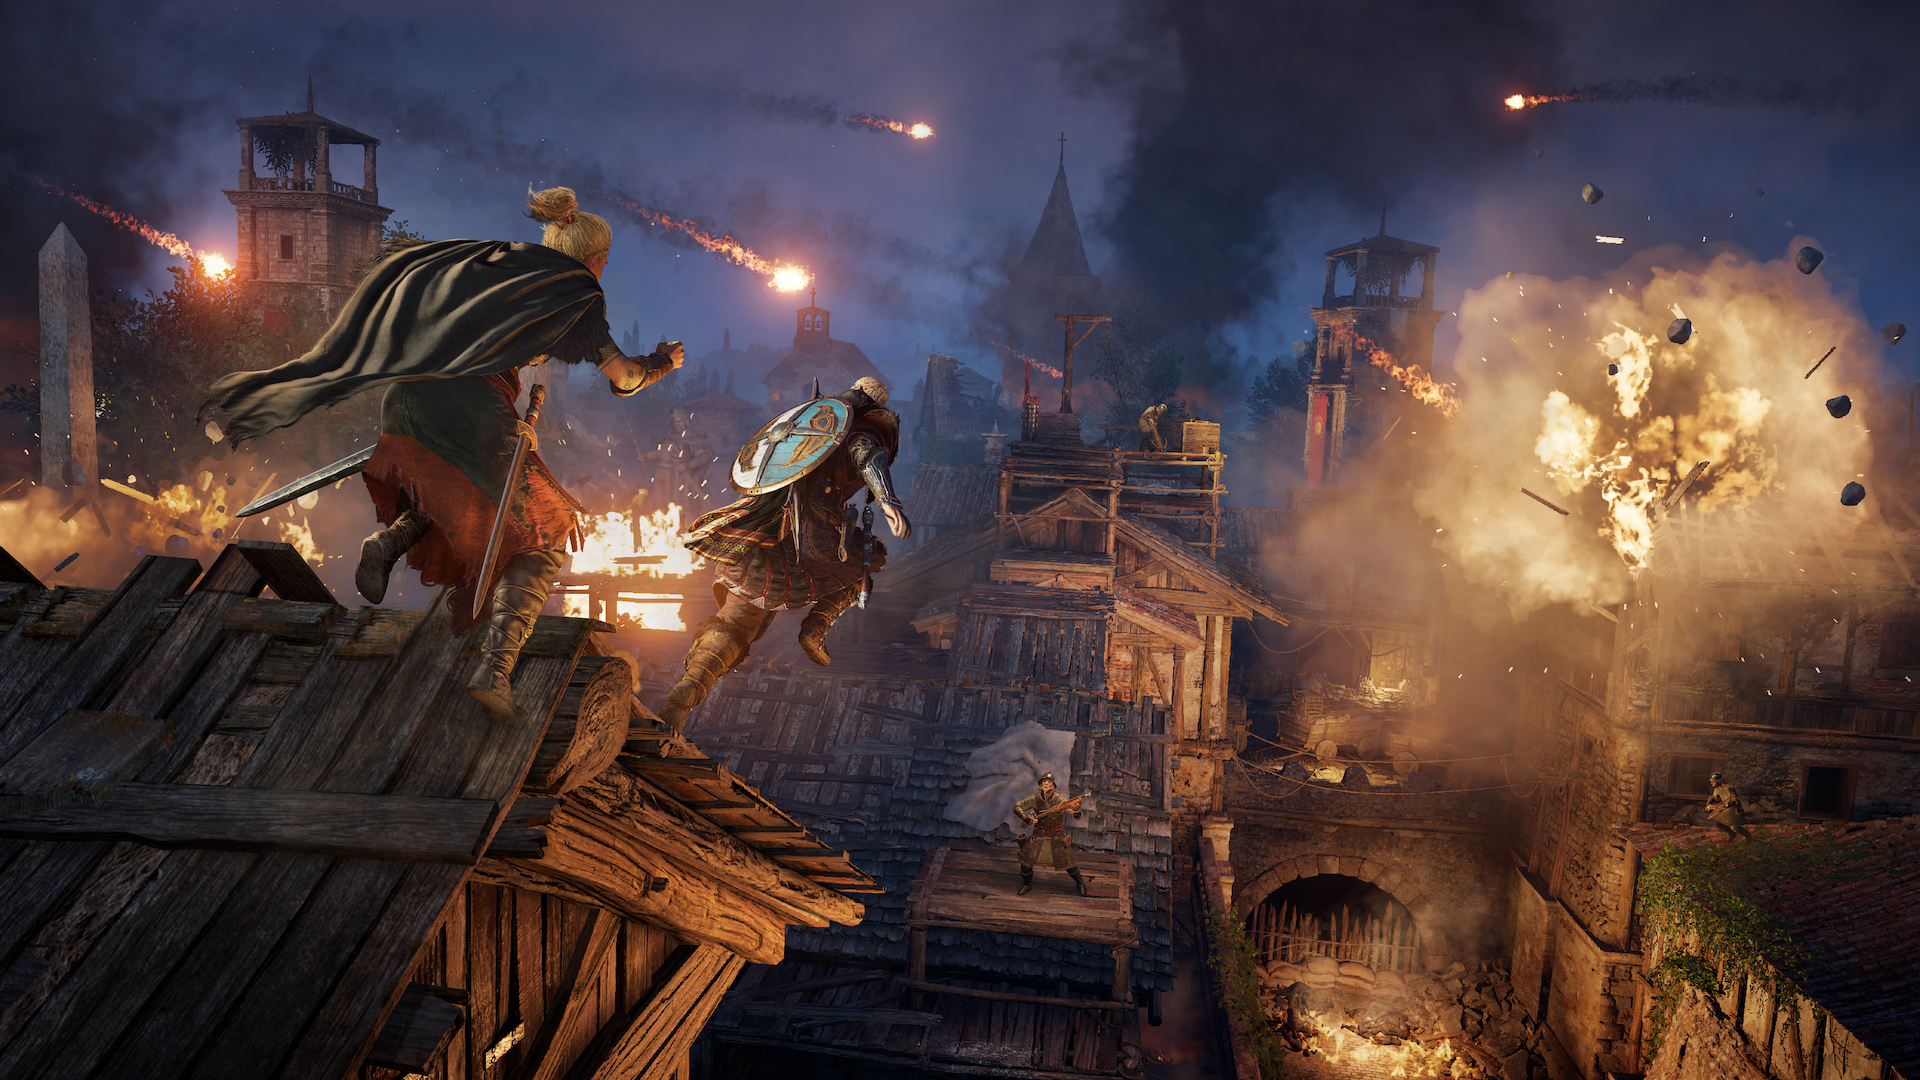 Assassin's Creed Valhalla: Dawn of Ragnarok Review